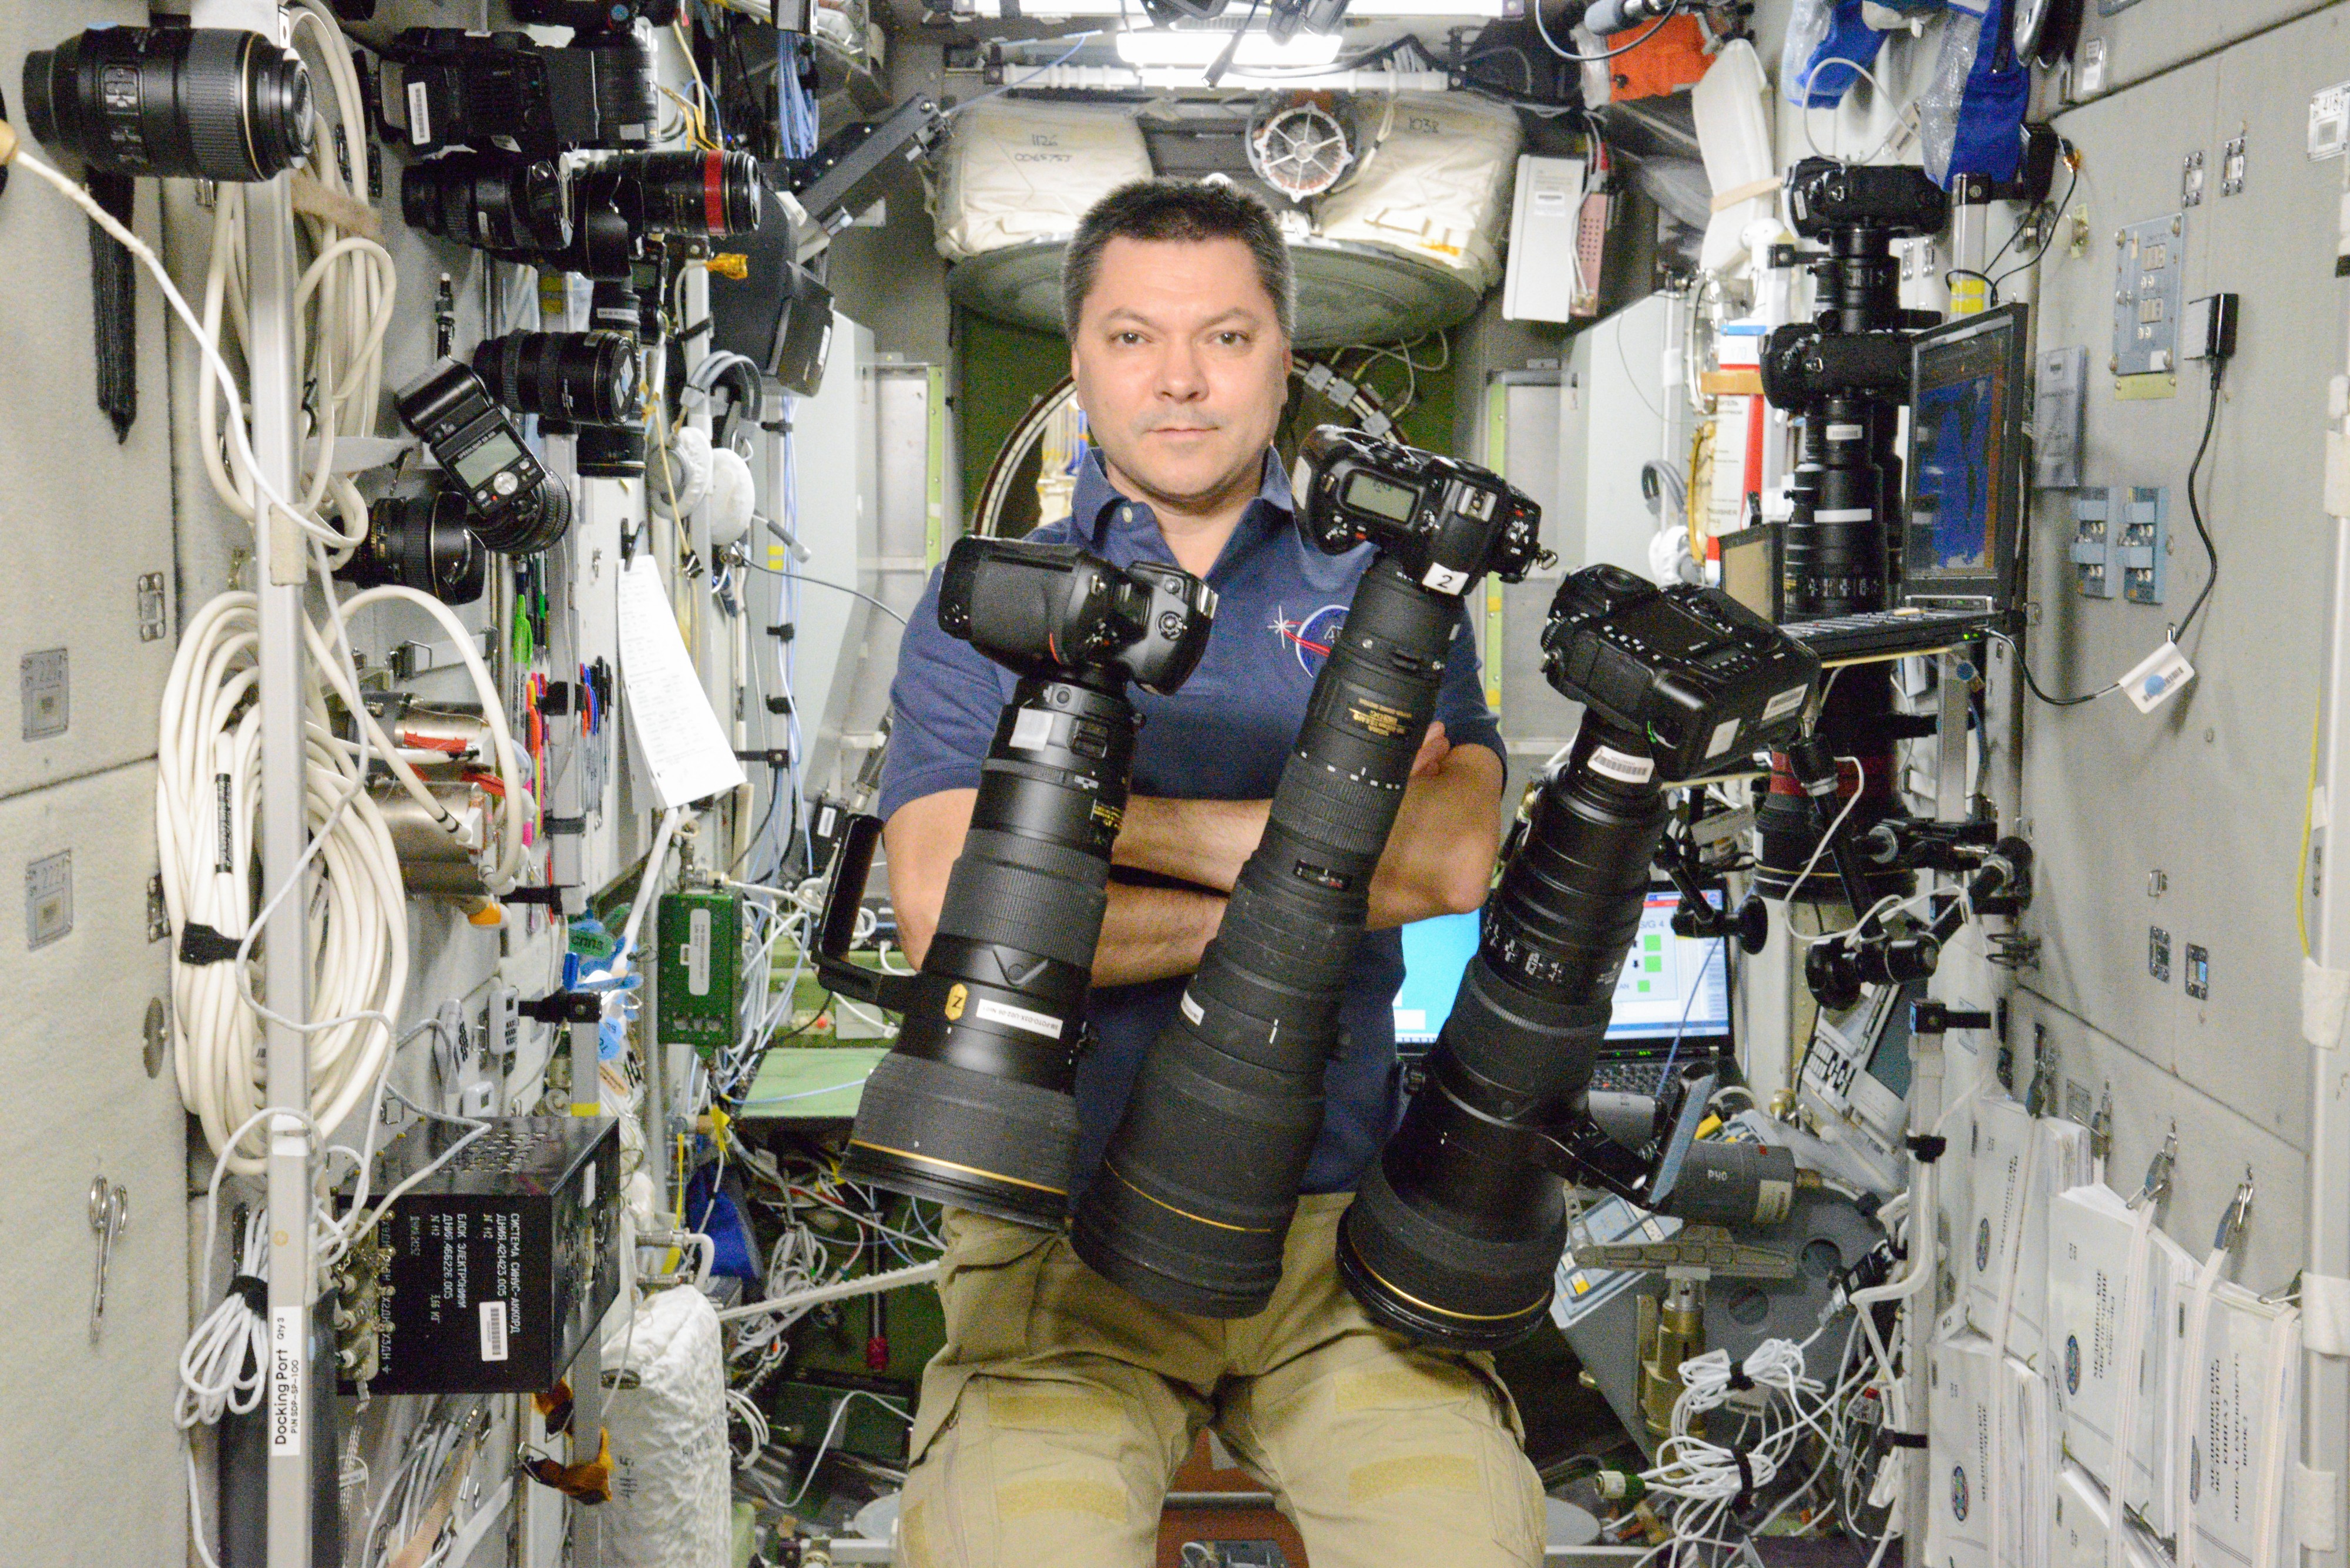 ISS-45 Oleg Kononenko with photo equipment in the Zvezda Service Module